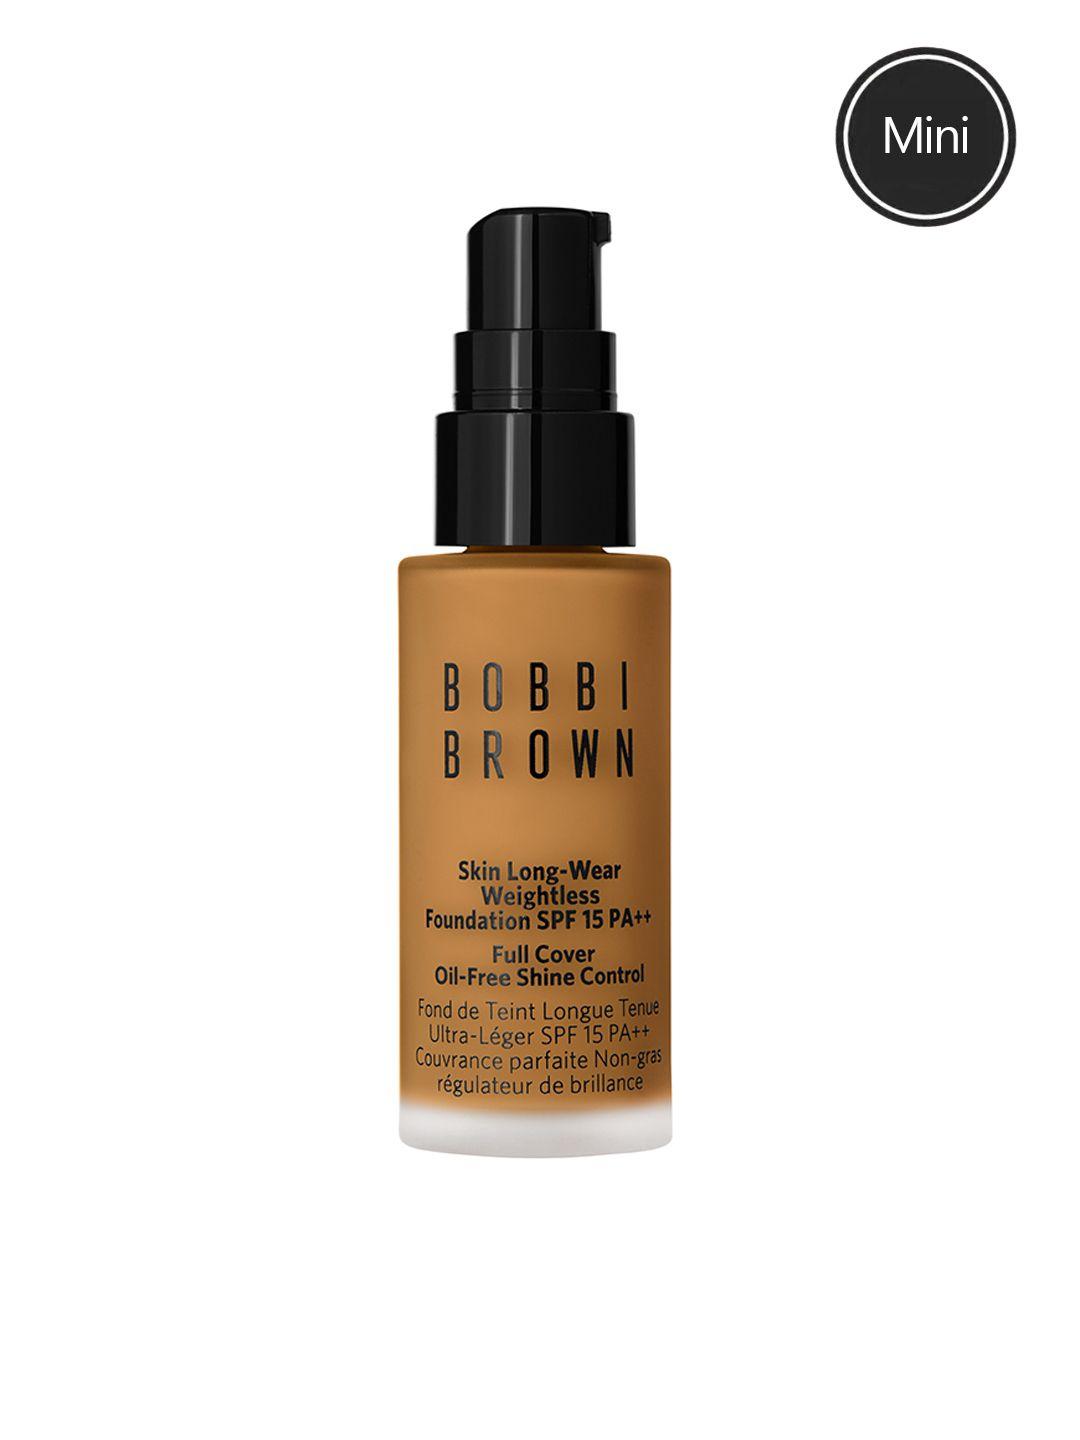 bobbi brown mini skin long-wear spf 15 weightless foundation 13 ml - golden